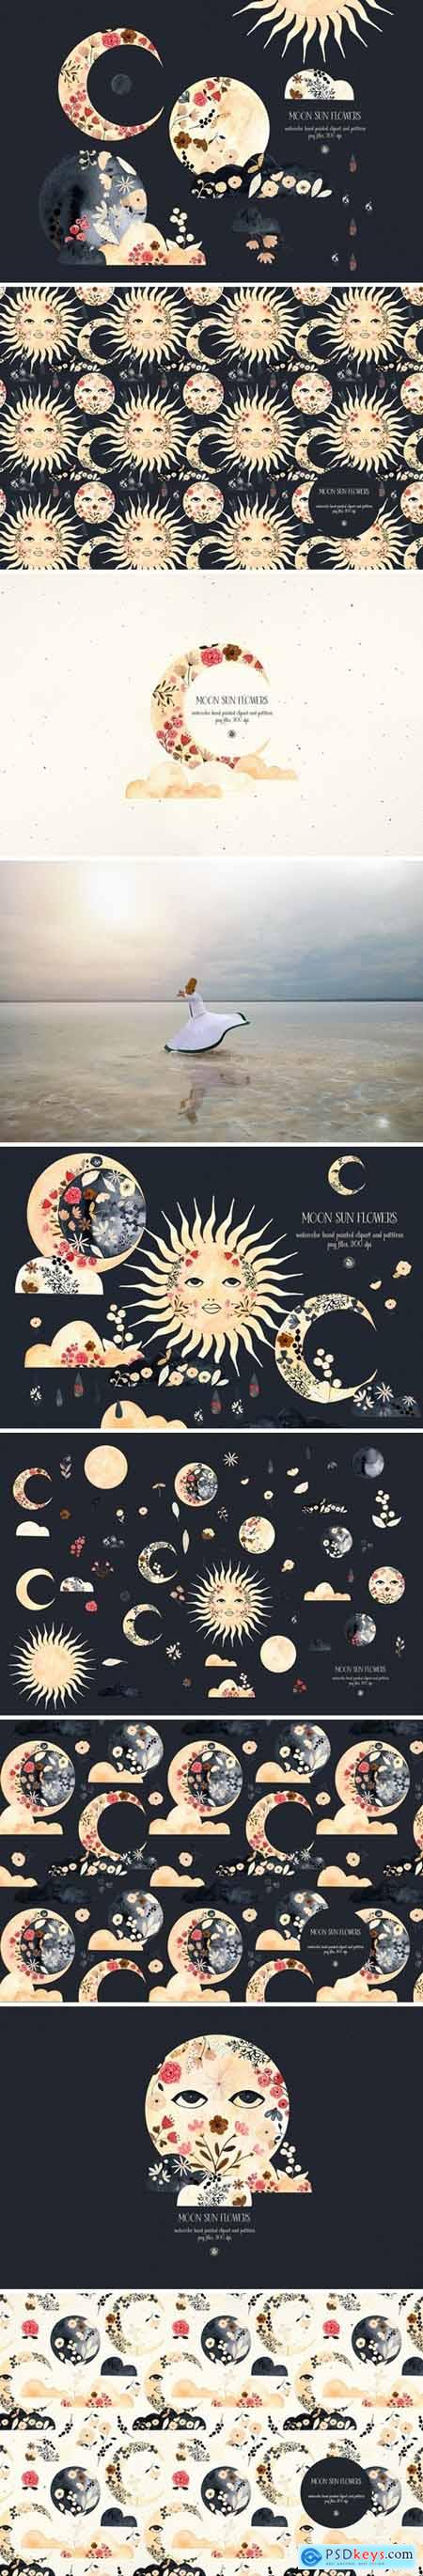 Moon Sun Flowers - watercolor set